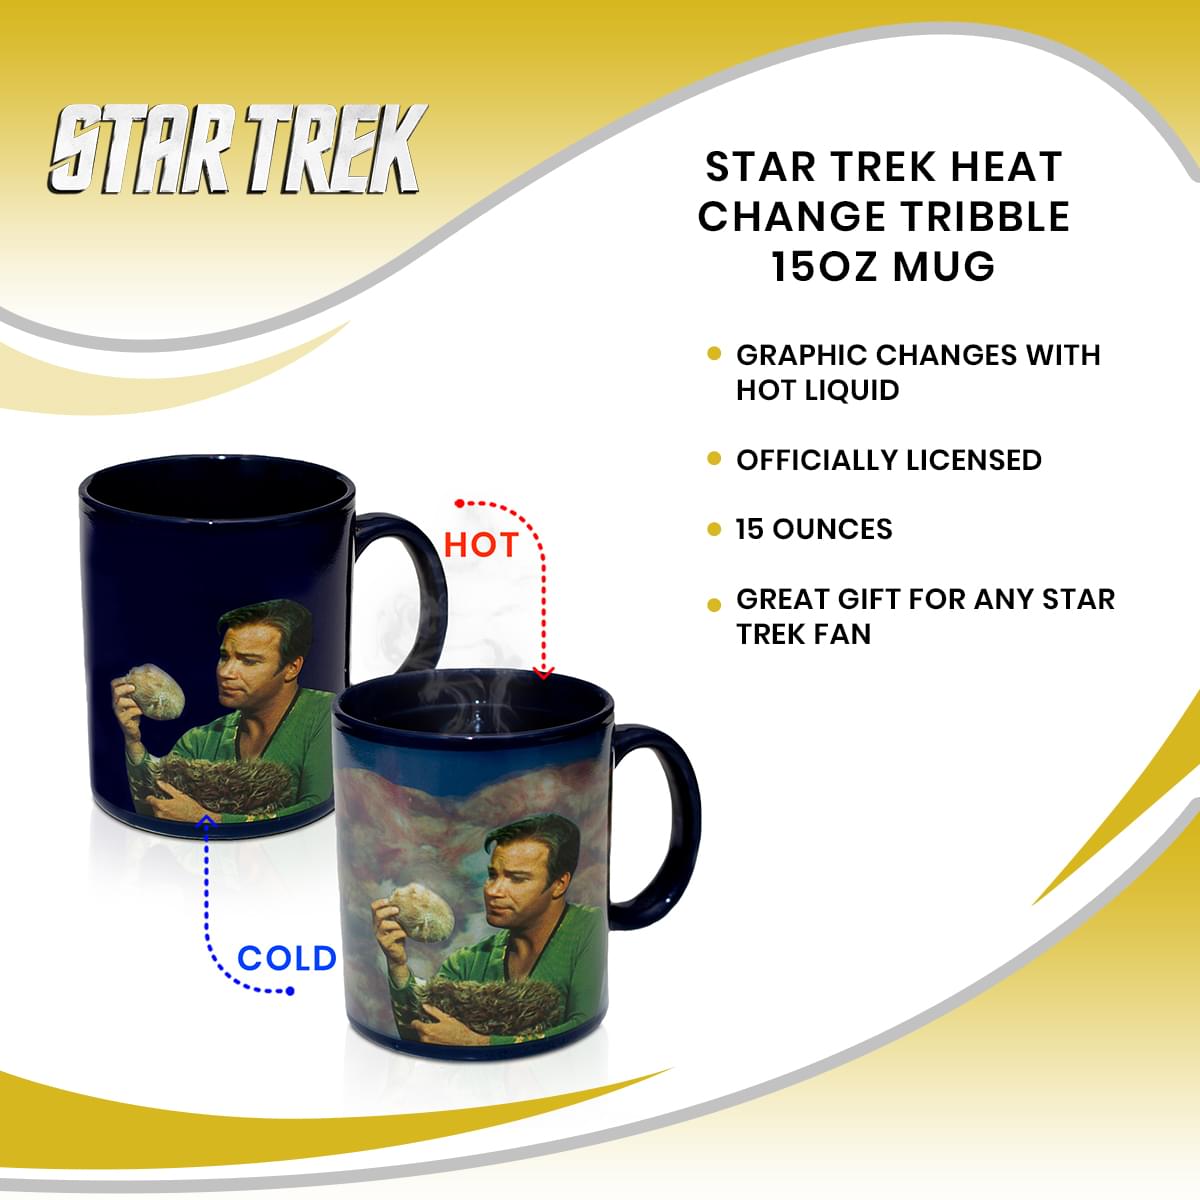 Star Trek Heat Change Tribble 15oz Mug